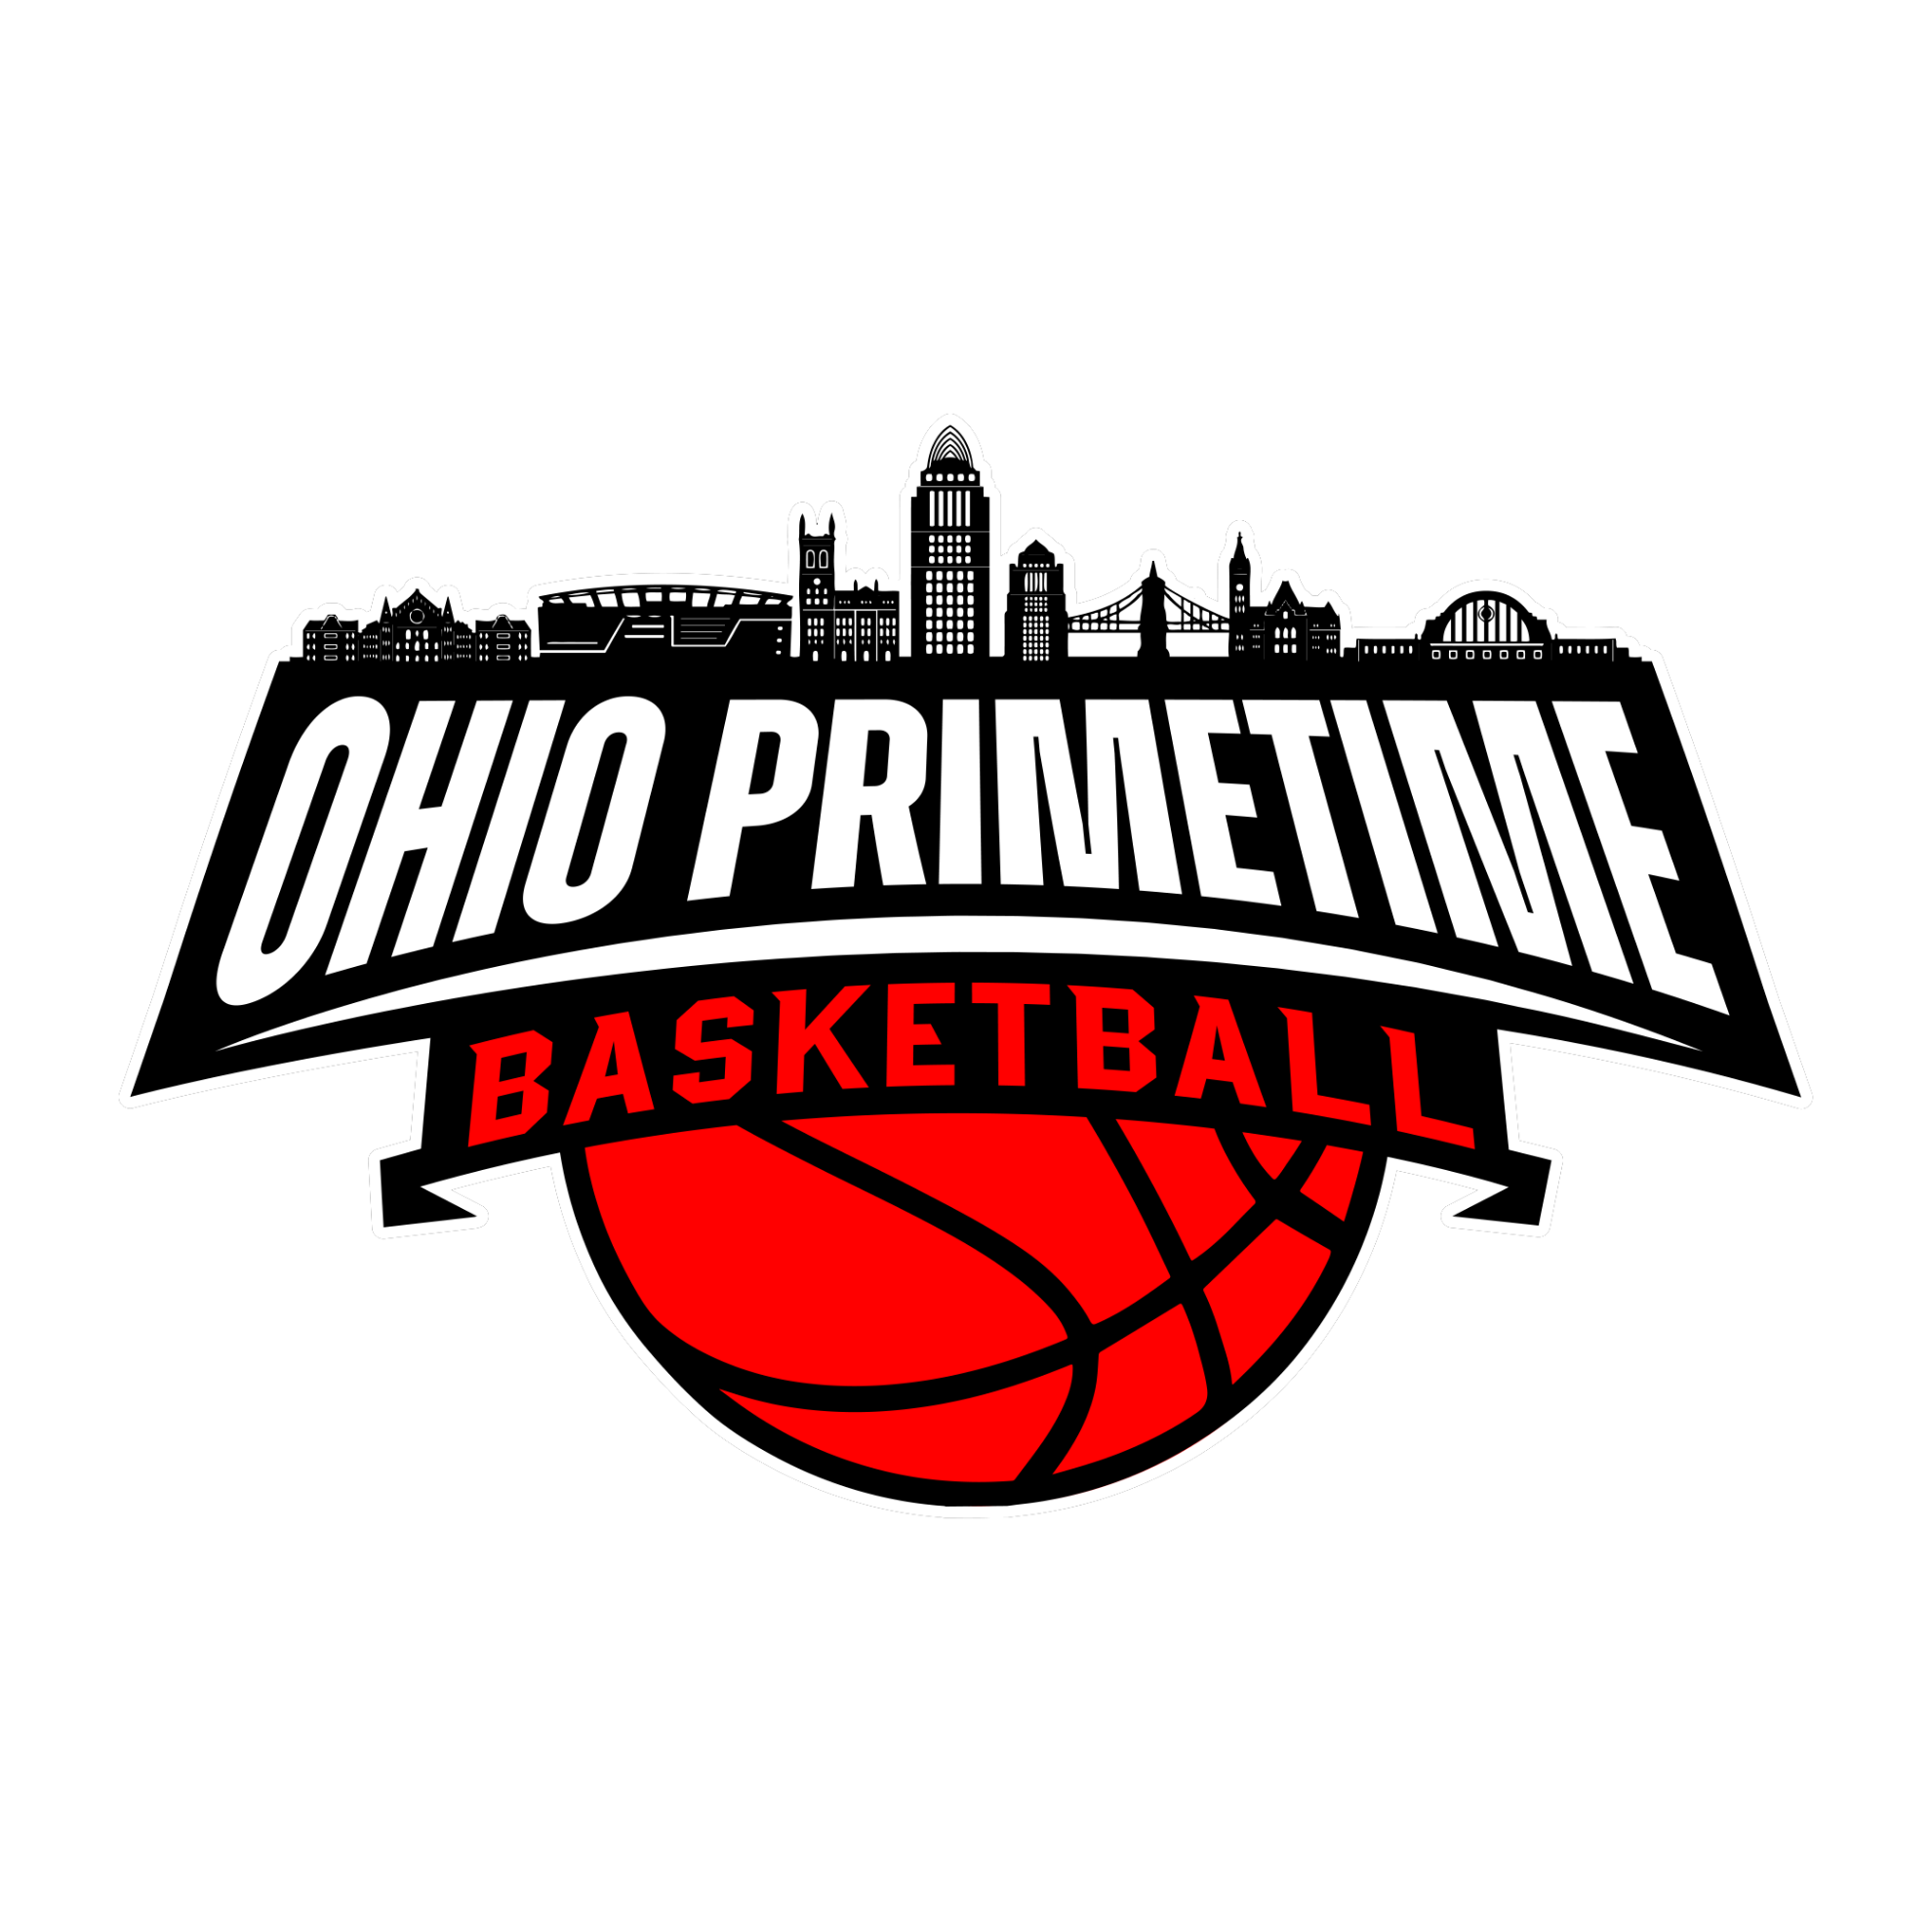 Merch @ Ohio Primetime Basketball